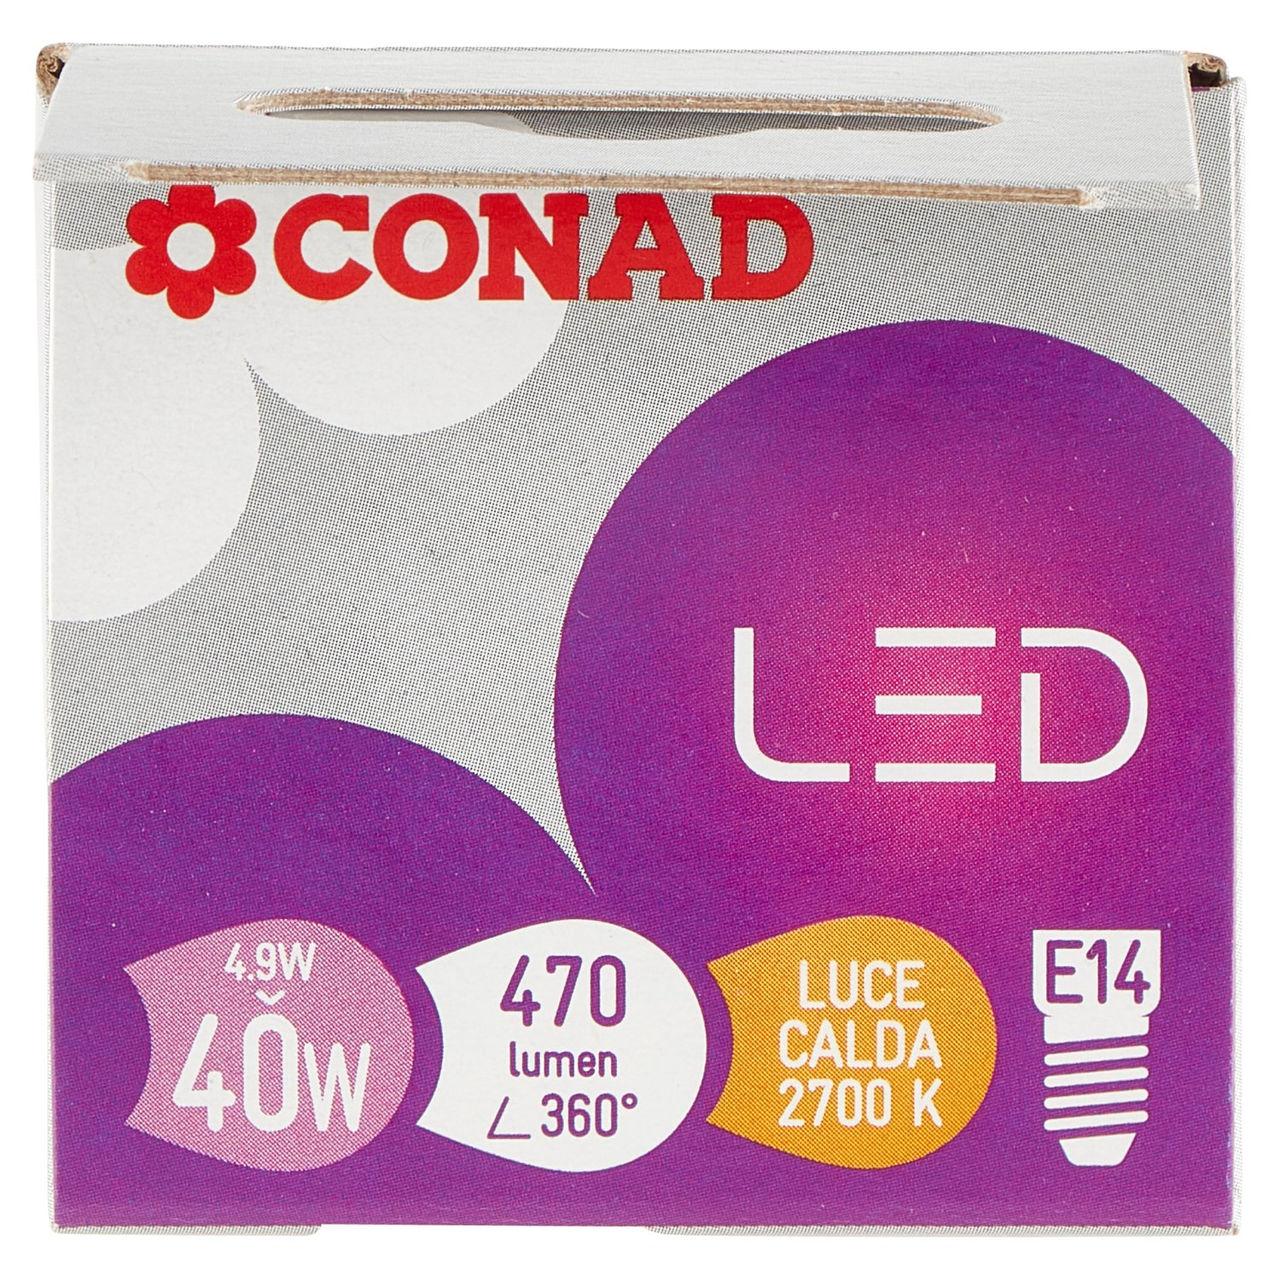 CONAD Led 4,9W 470 Lumen E14 Luce Calda